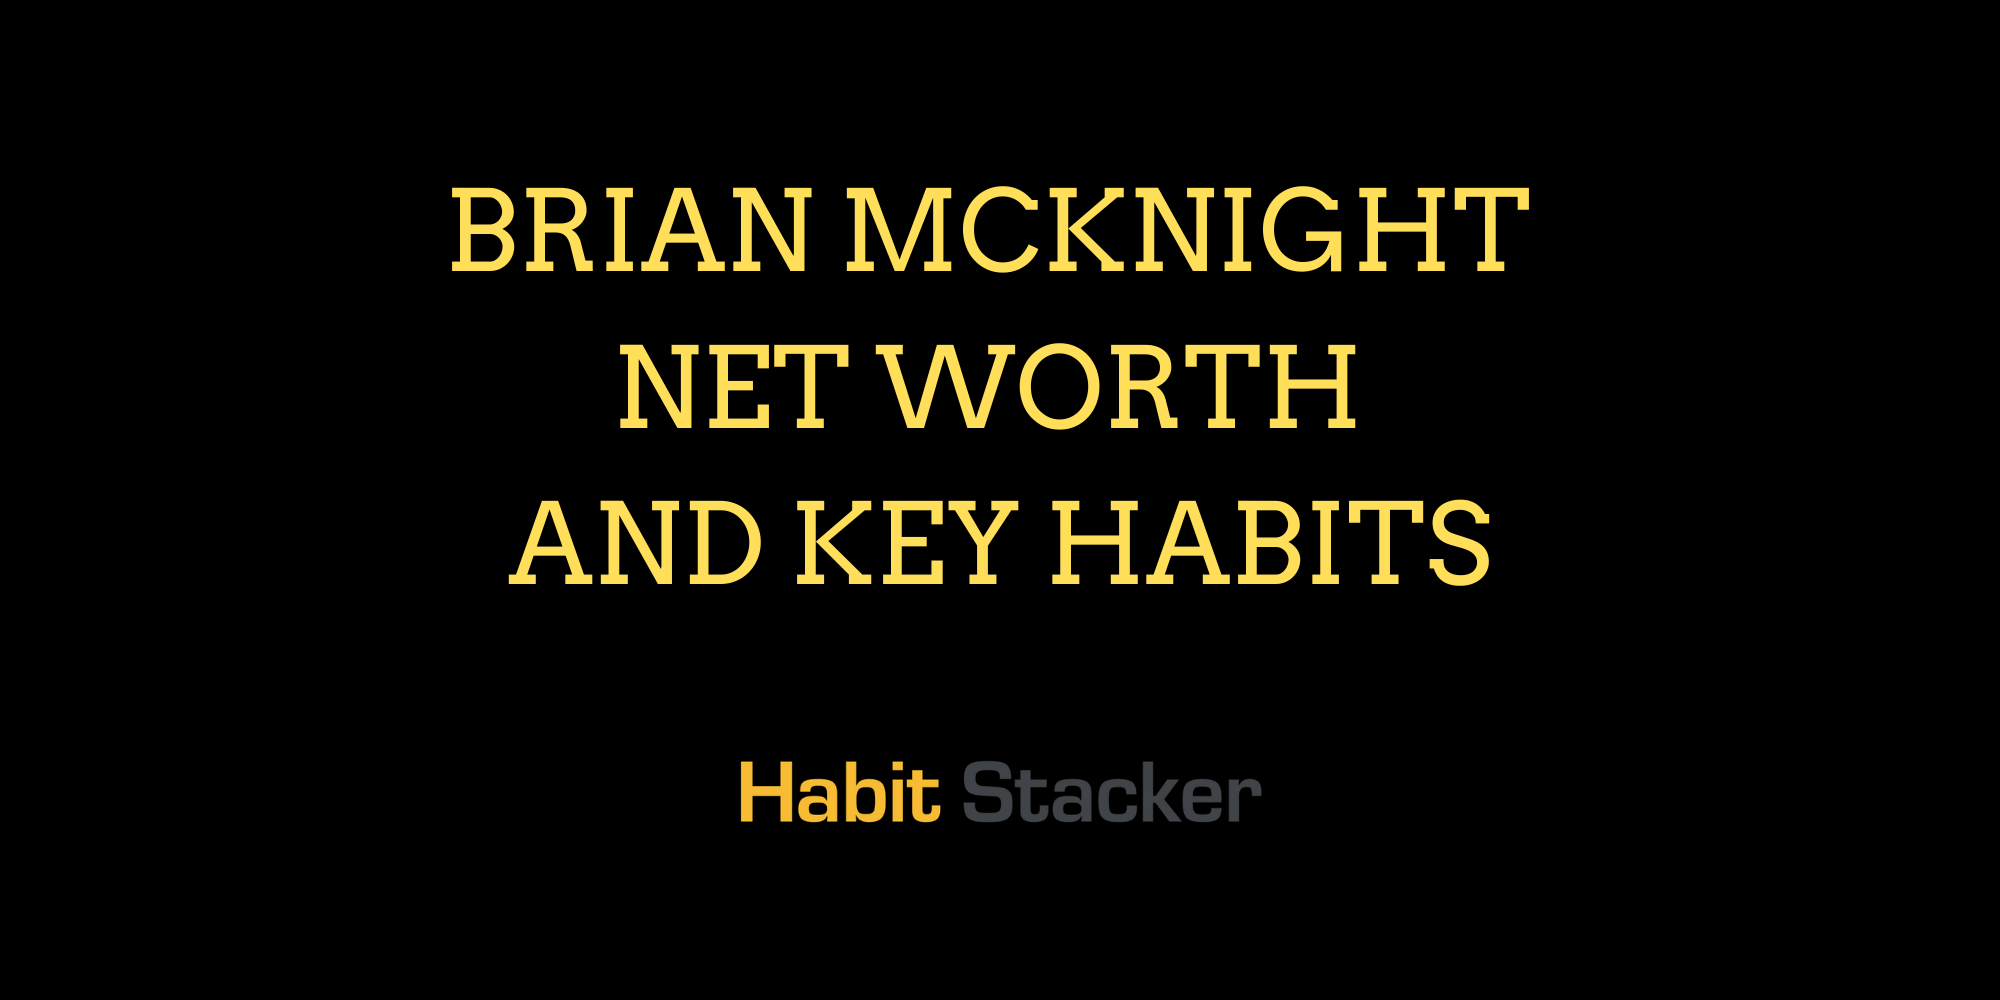 Brian McKnight Net Worth and Key Habits